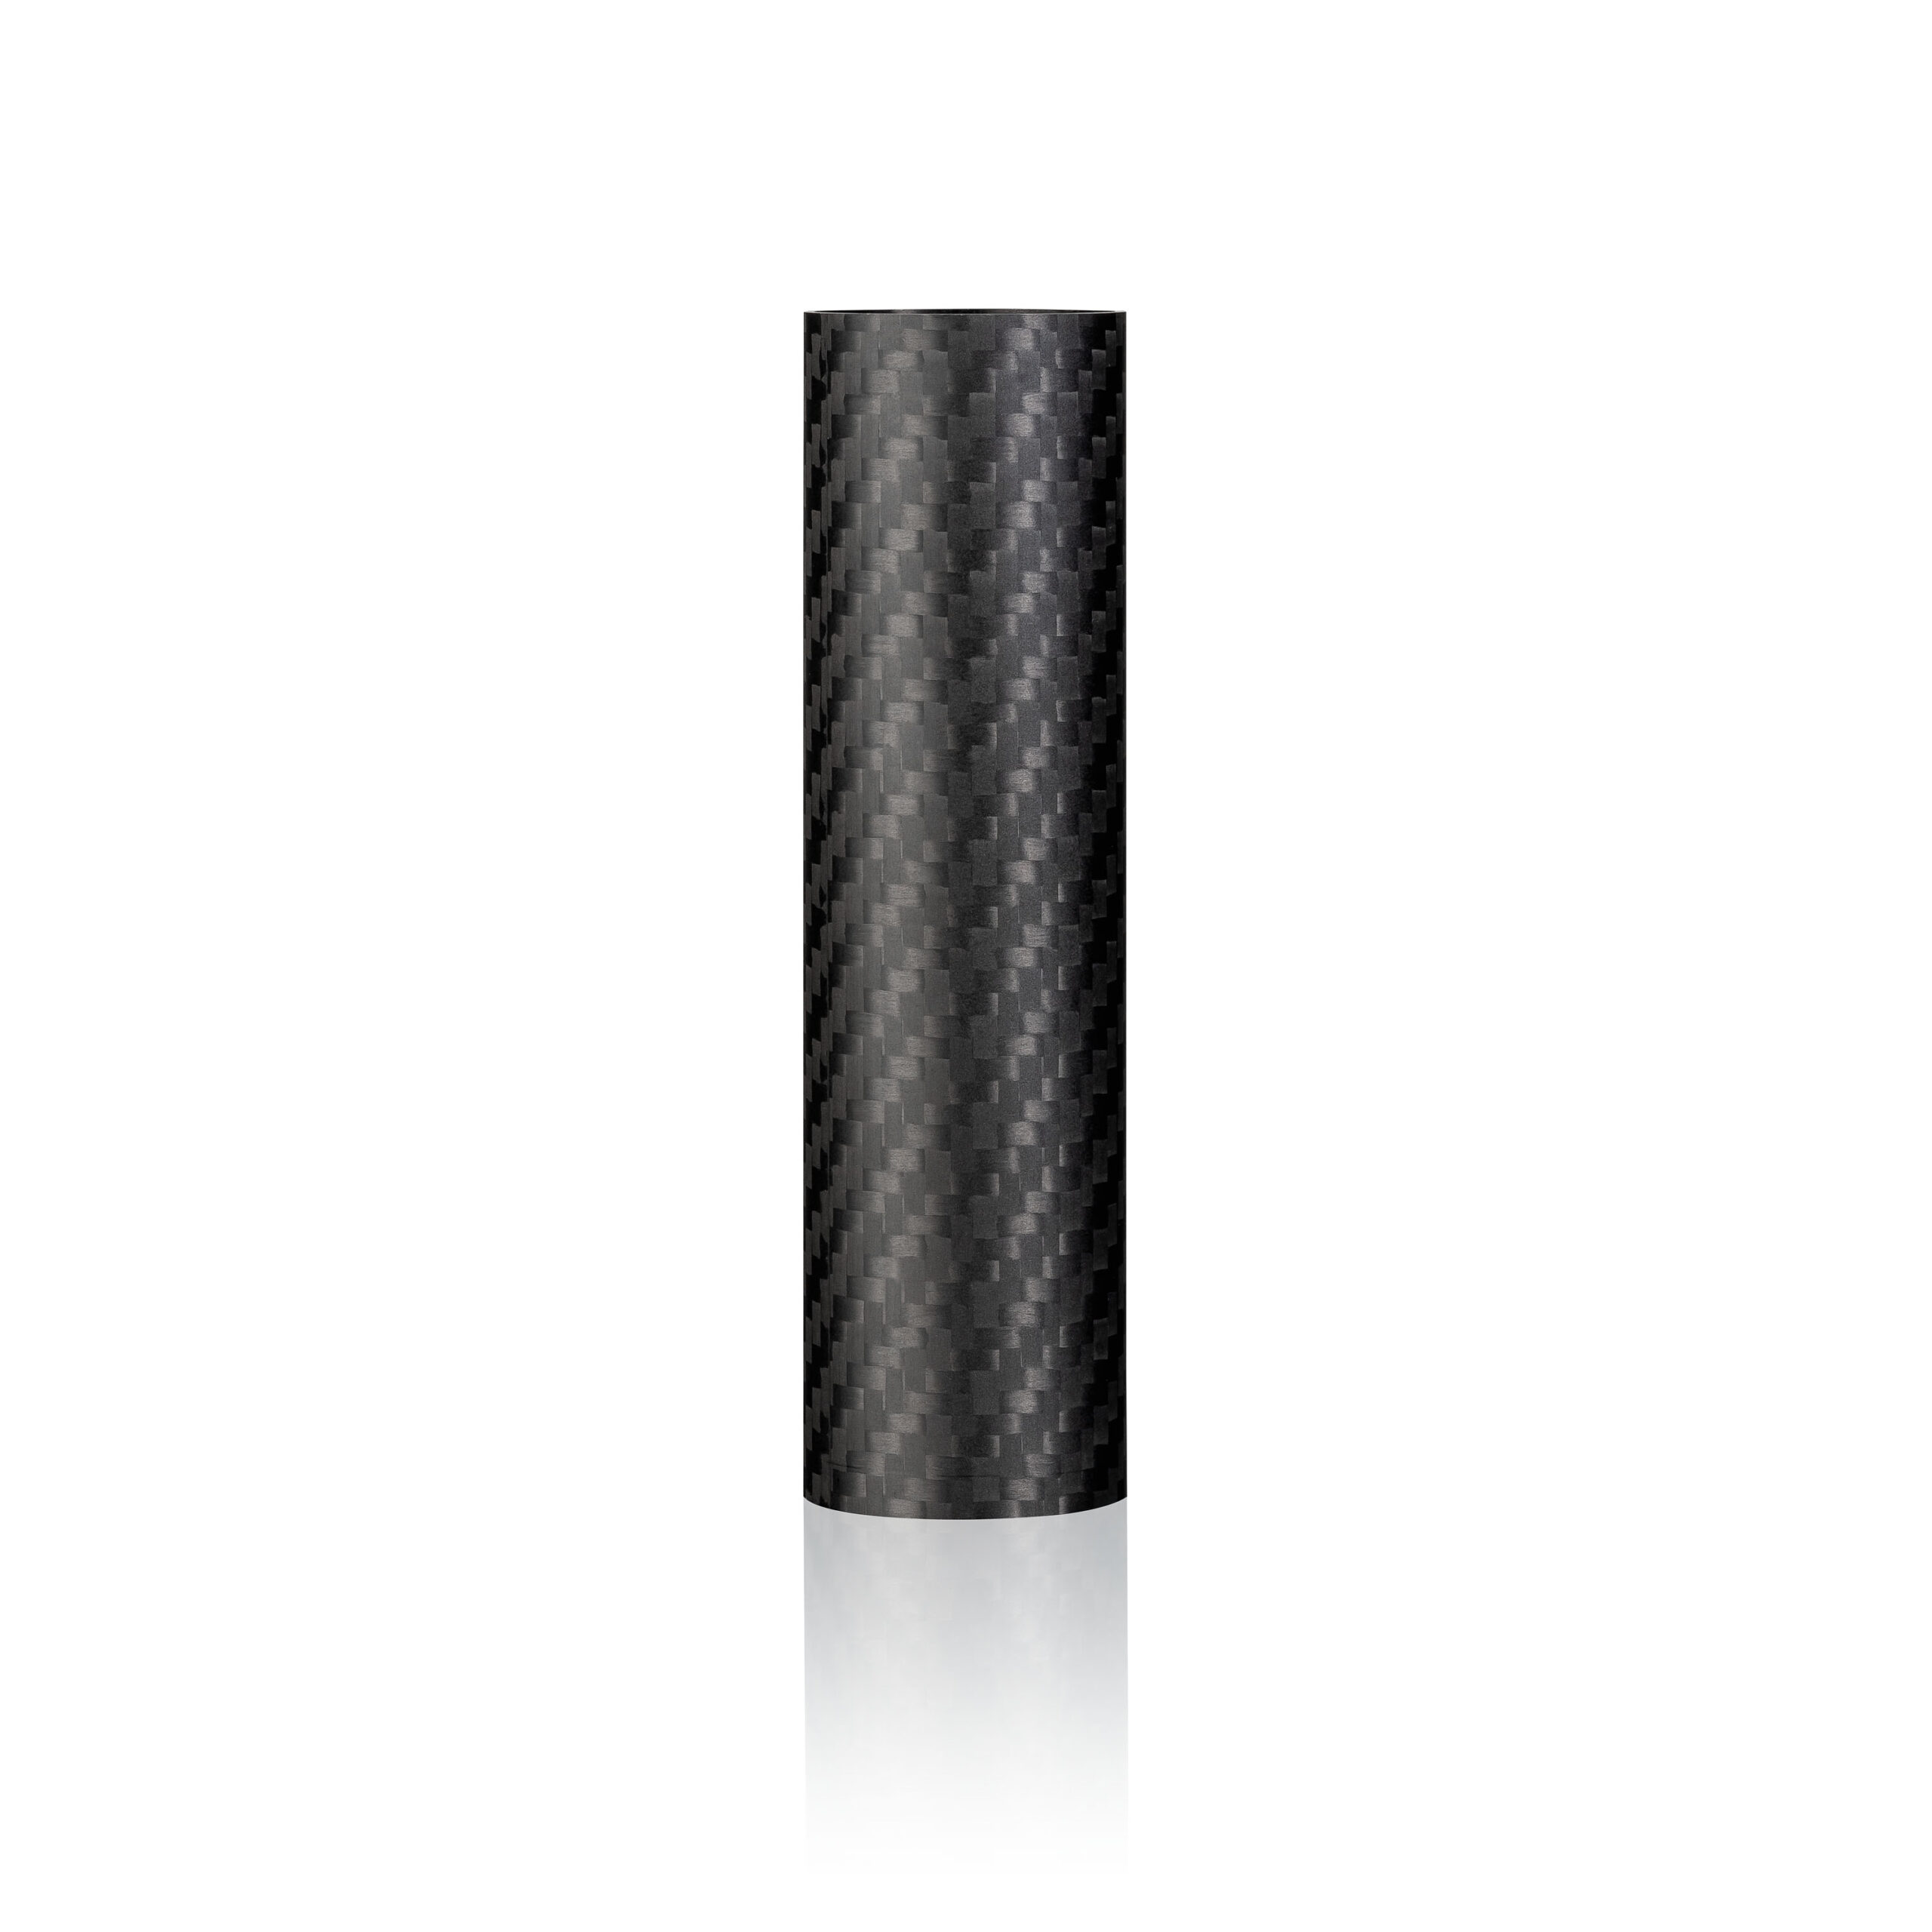 shisha sleeve for steamulation xpansion mini in carbon black matt color